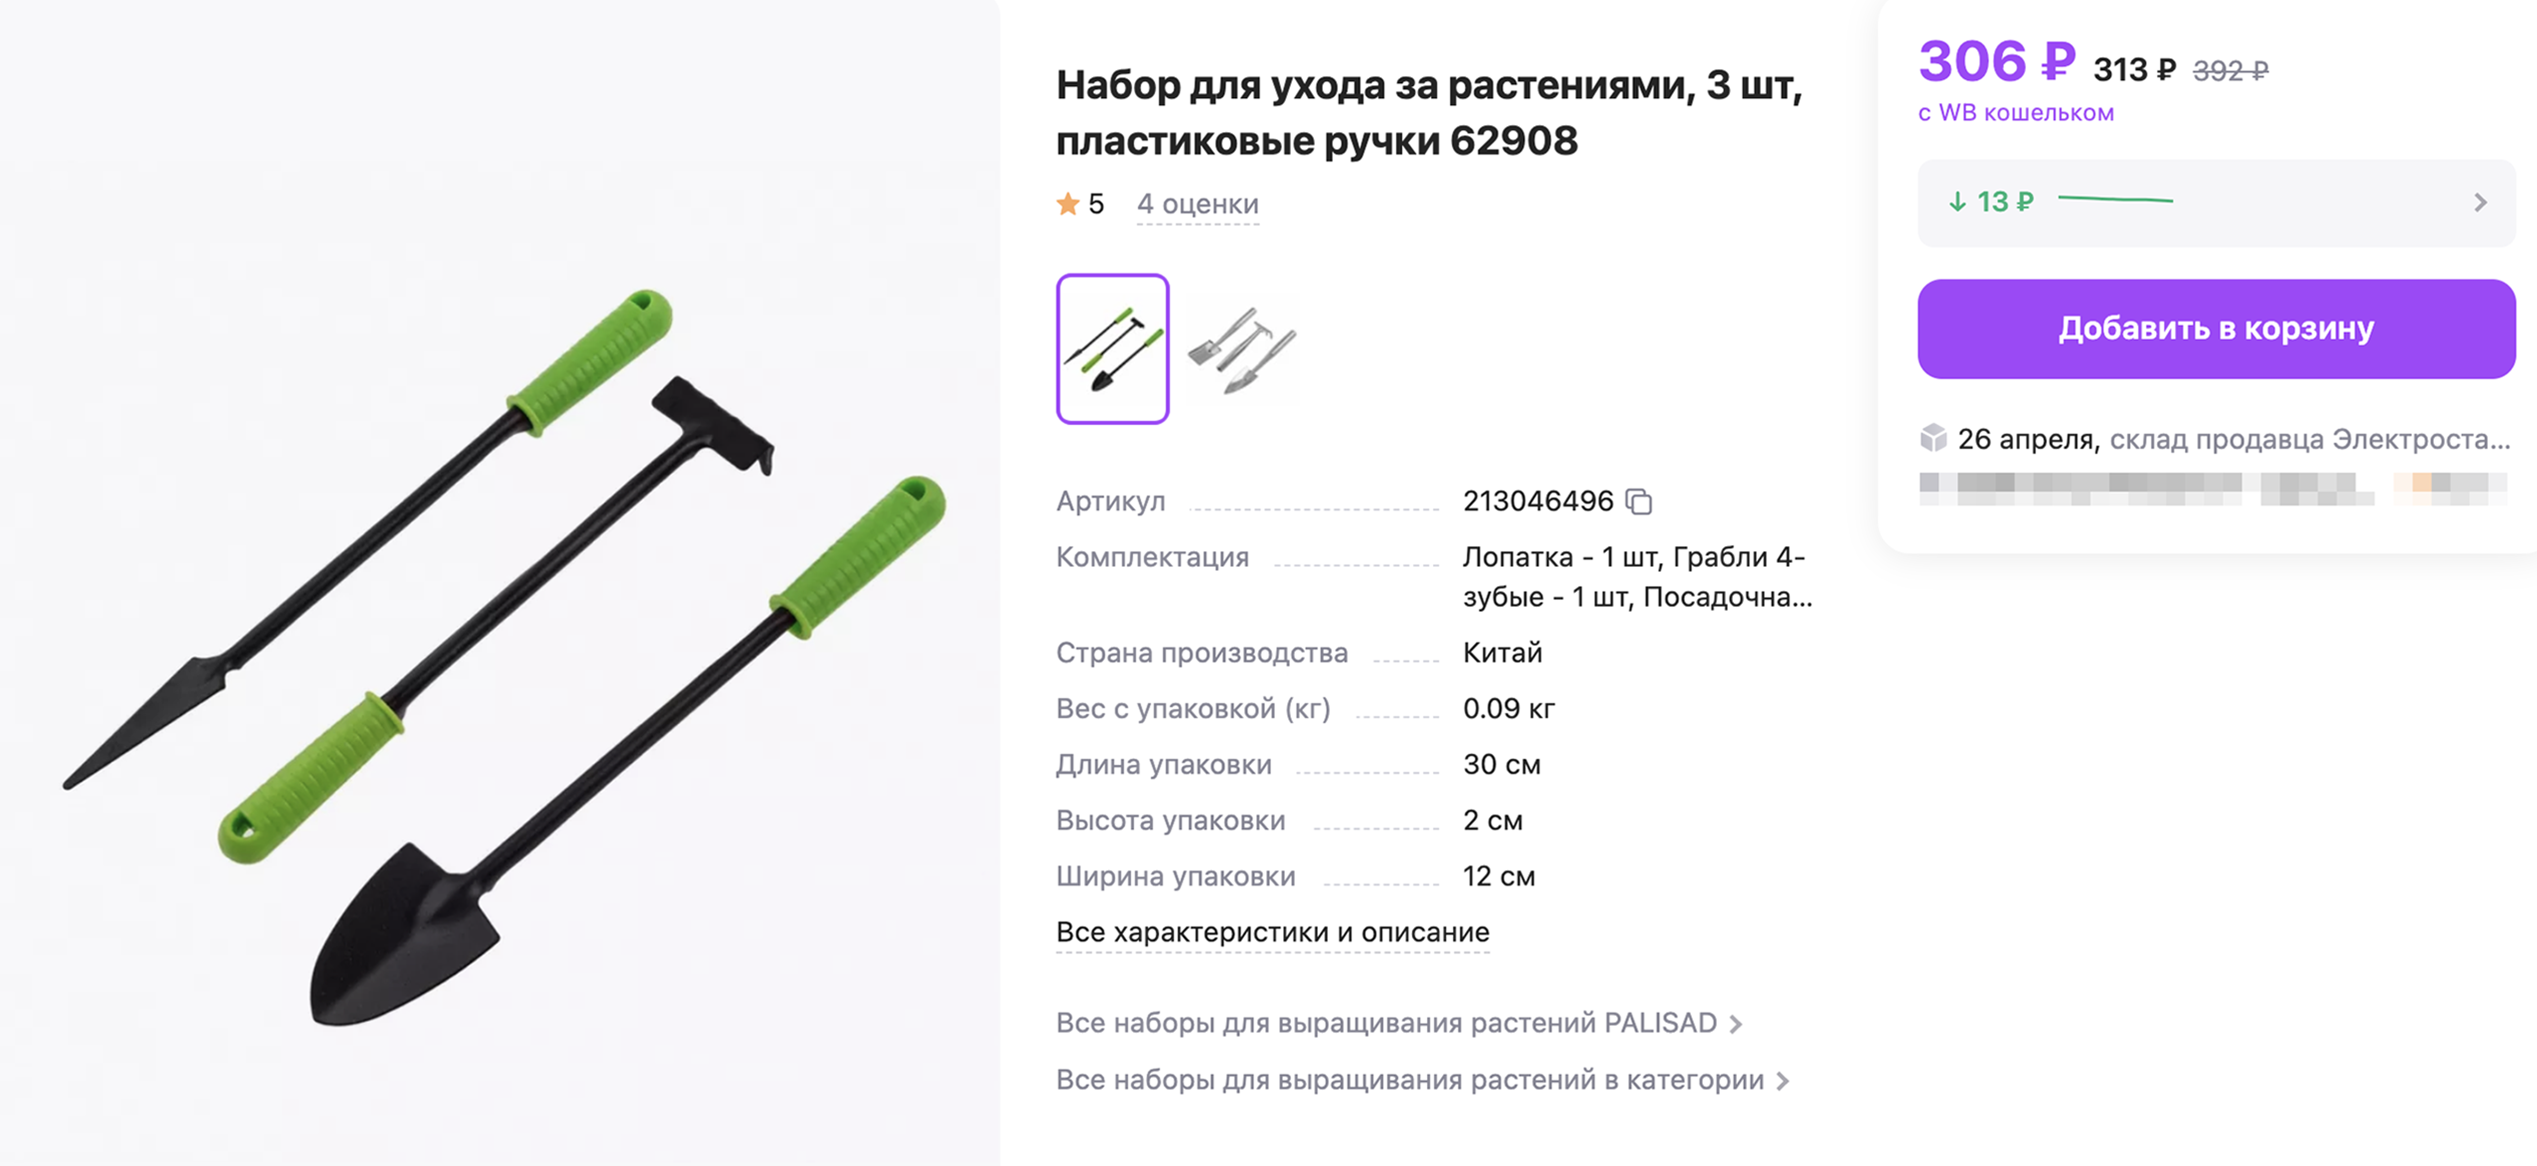 Эти инструменты можно найти на маркетплейсе. Источник: wildberries.ru